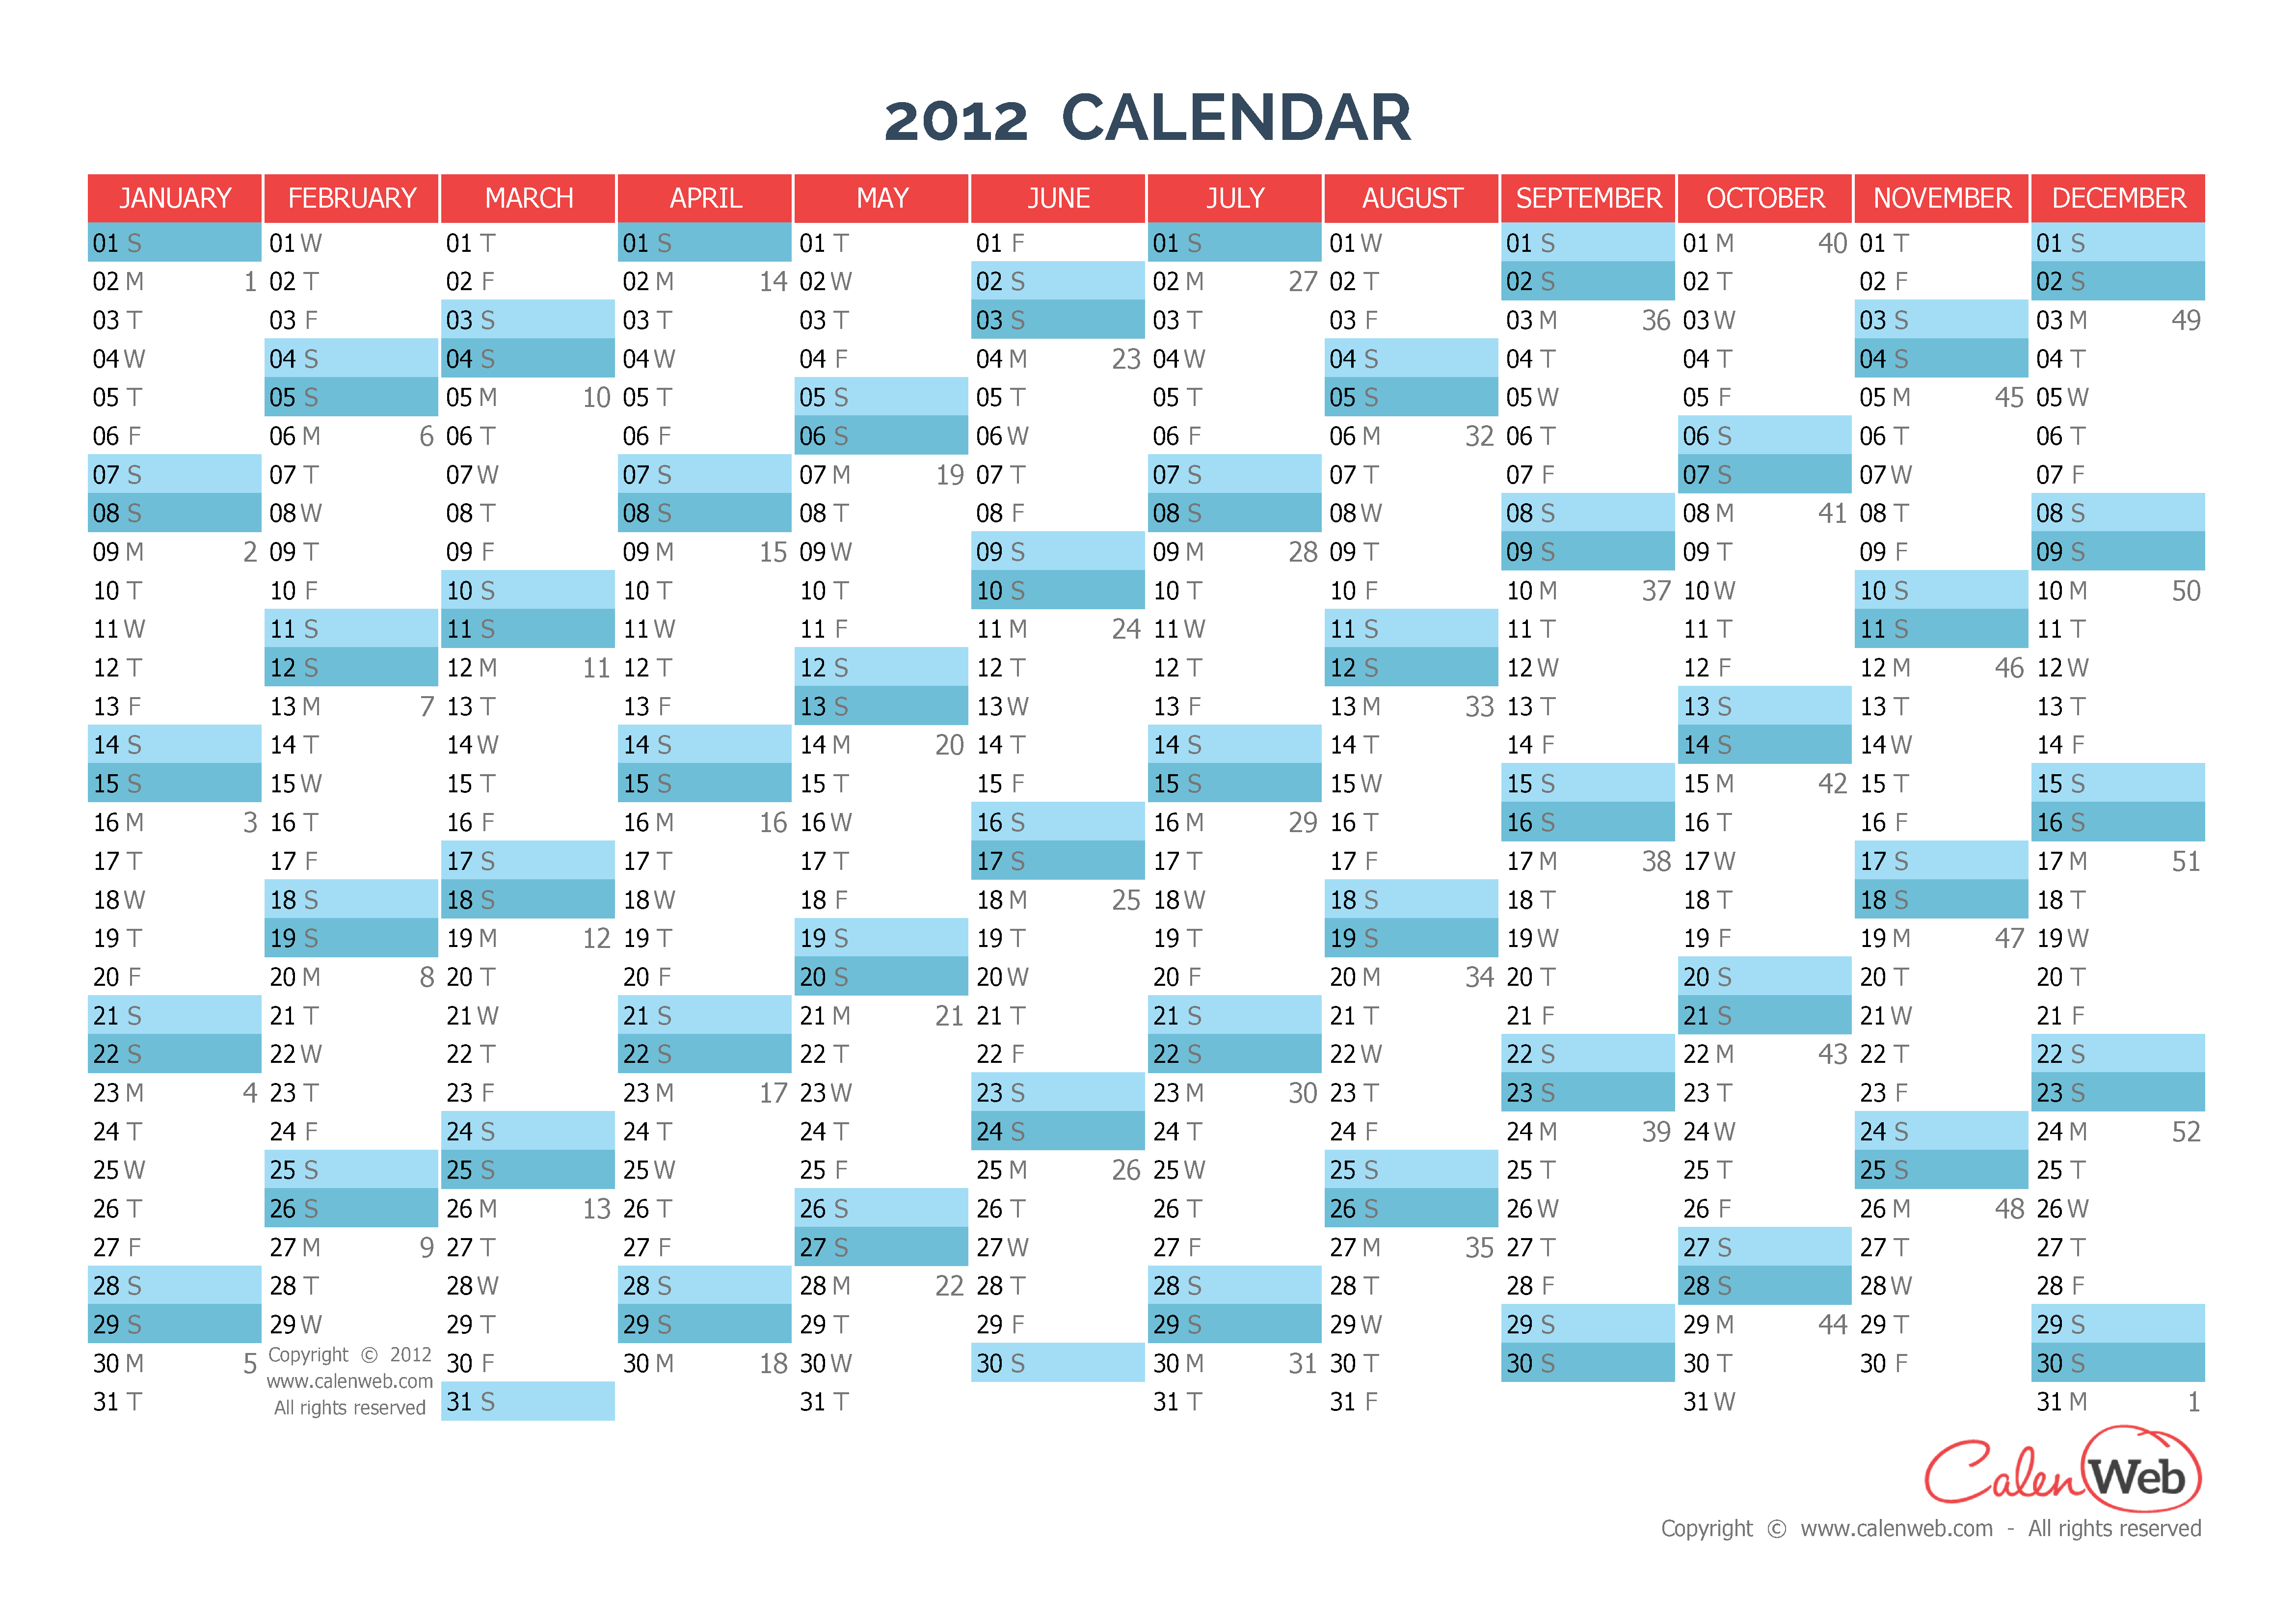 Yearly calendar Year 2012 Yearly horizontal planning Calenweb com